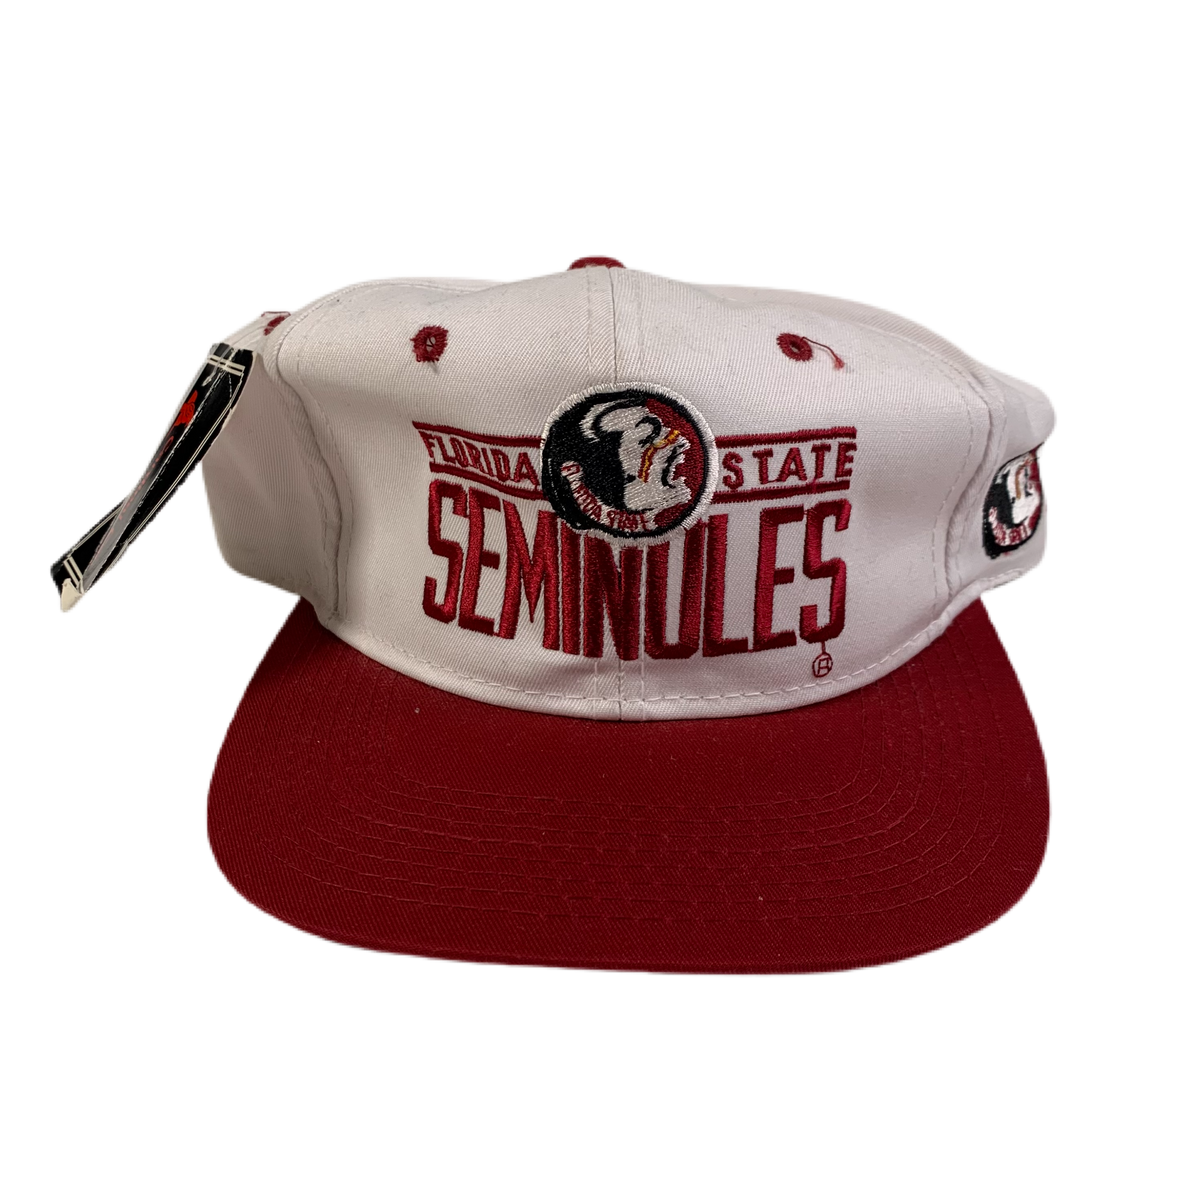 Vintage Florida State University &quot;Seminoles&quot; Hat